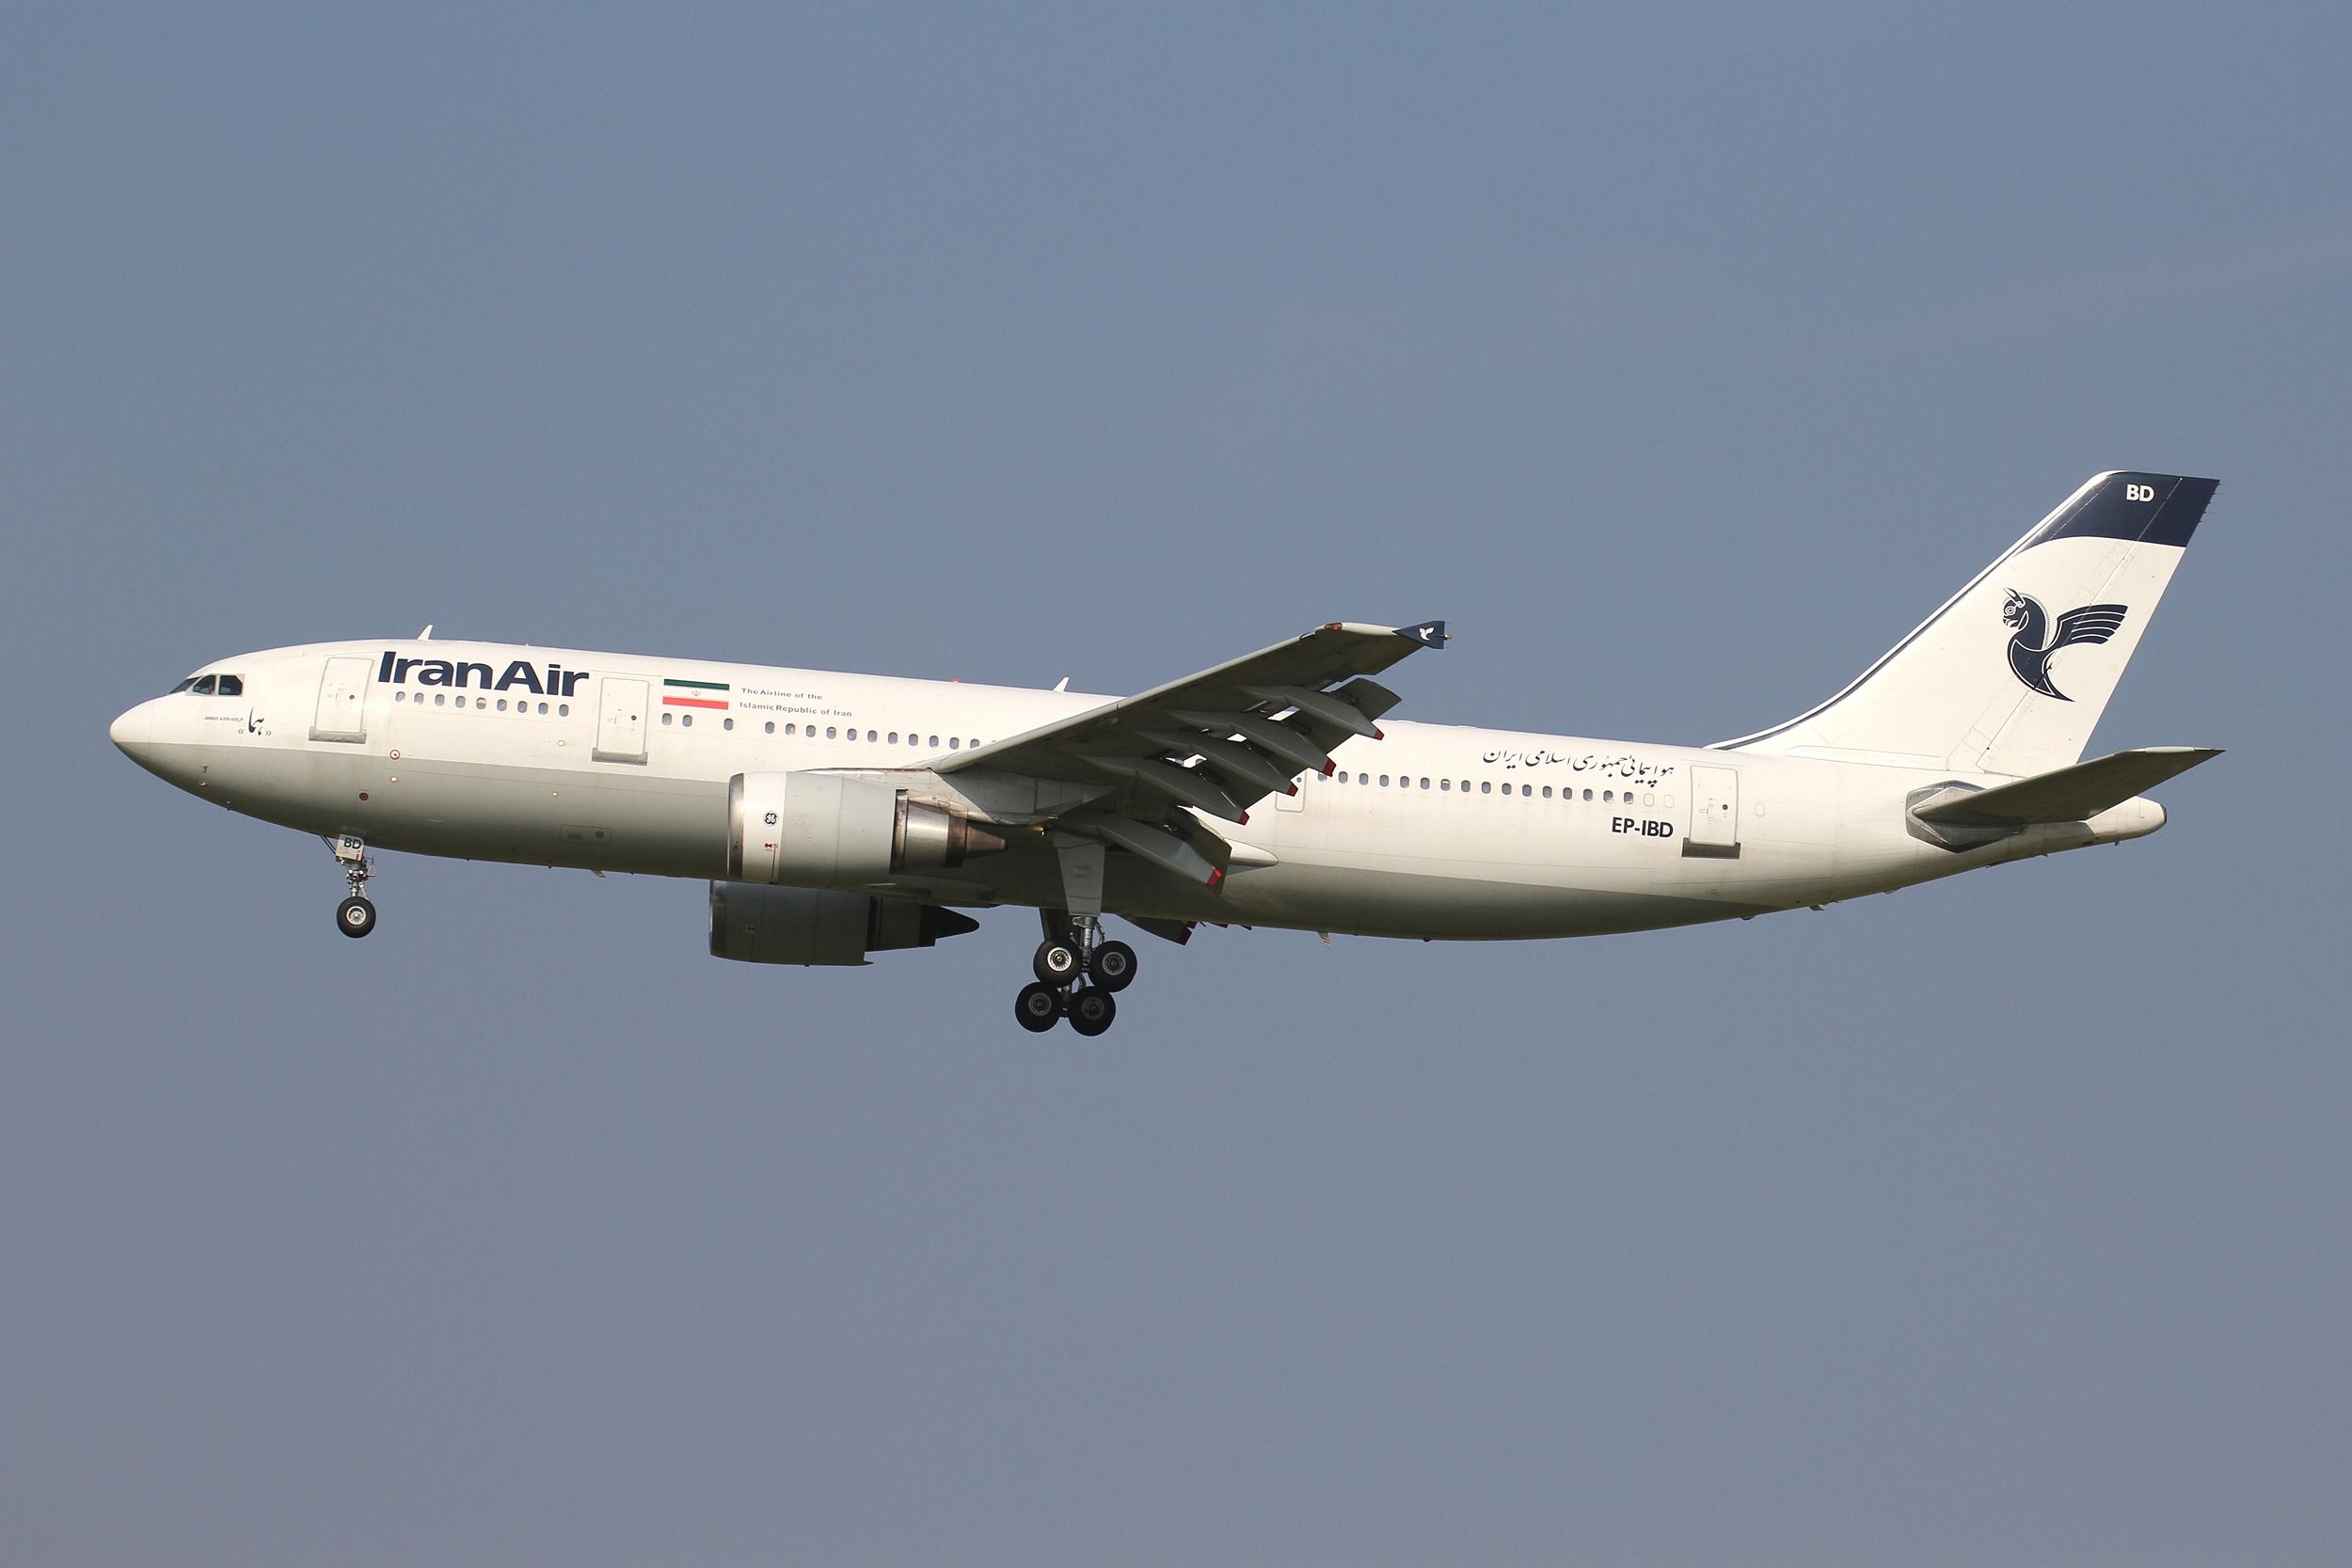 Iran Air Airbus A300 lands